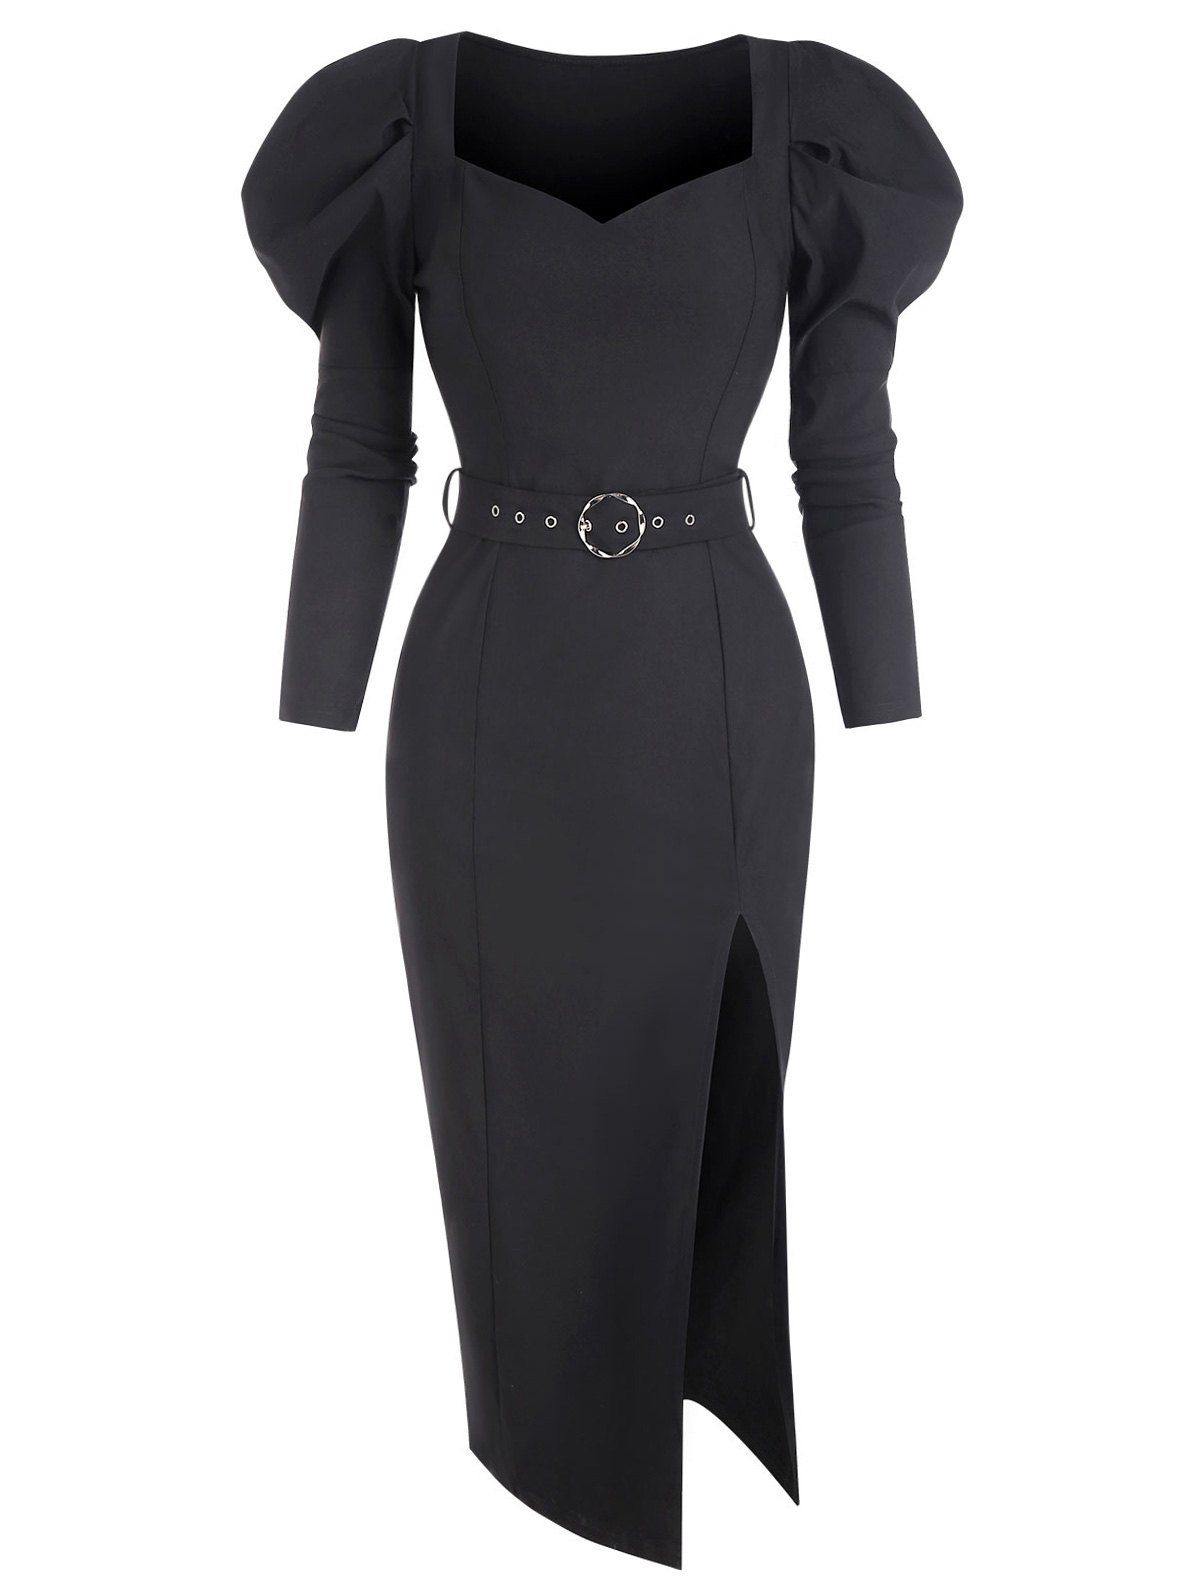 Gigot Sleeve Slit Belted Midi Dress - BLACK M